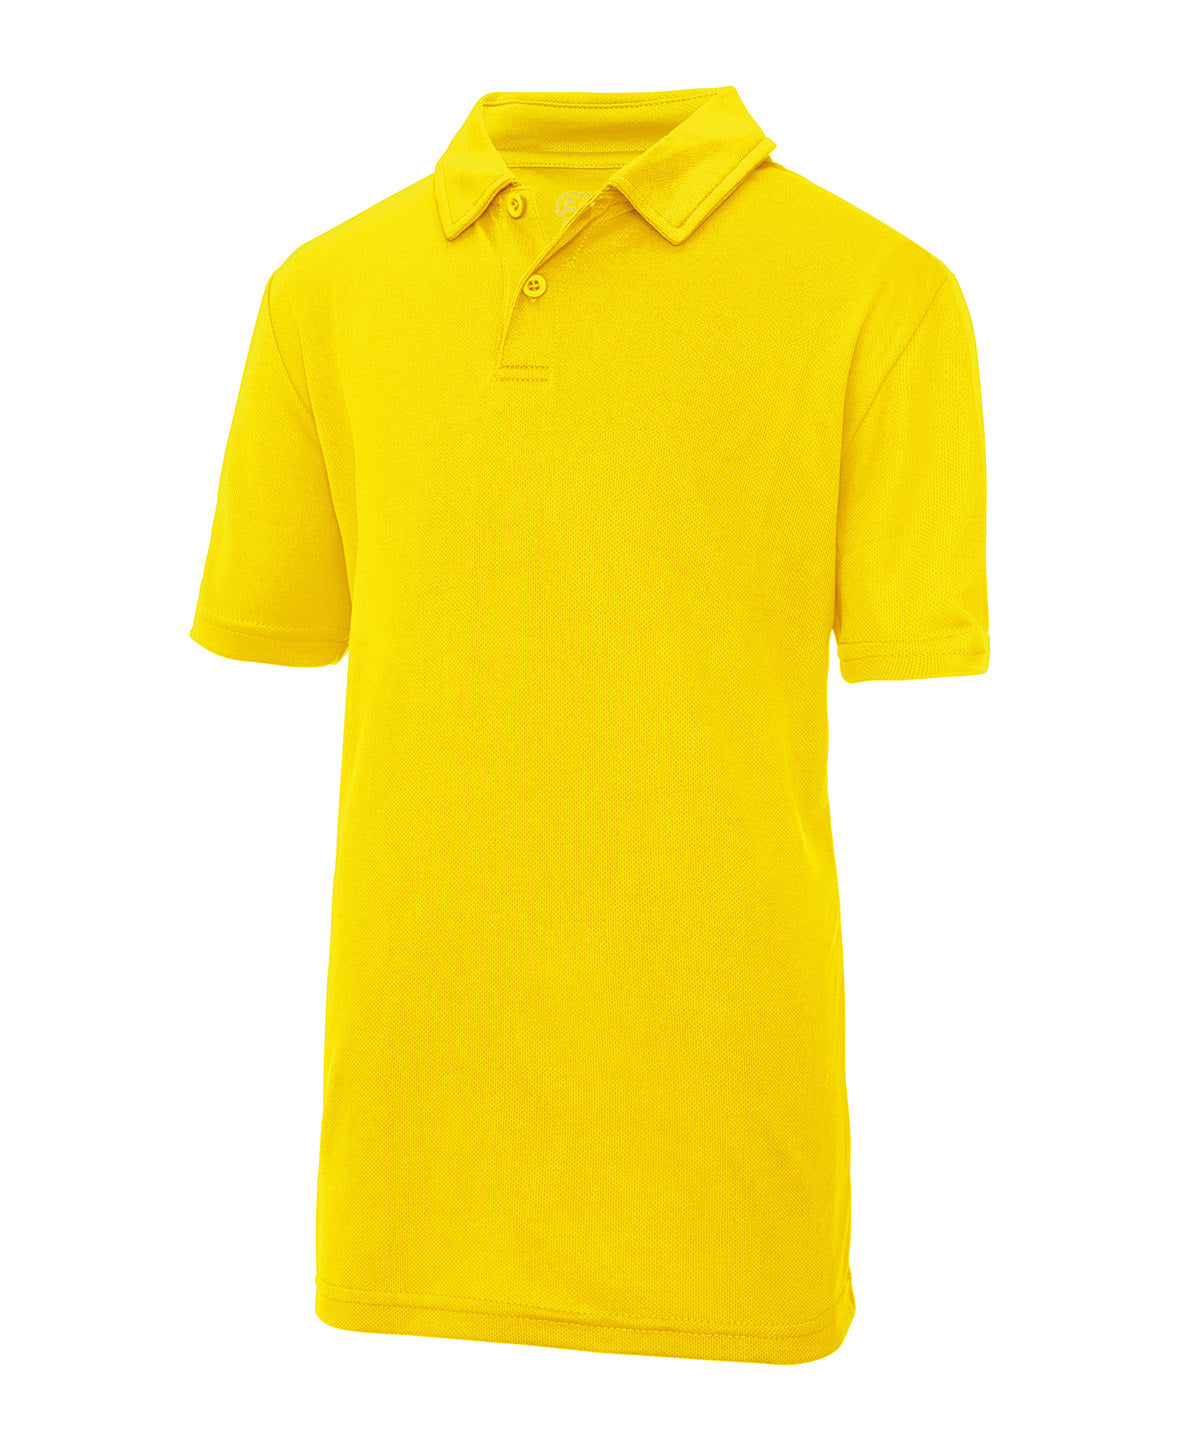 Personalised Polo Shirts - Burgundy AWDis Just Cool Kids cool polo